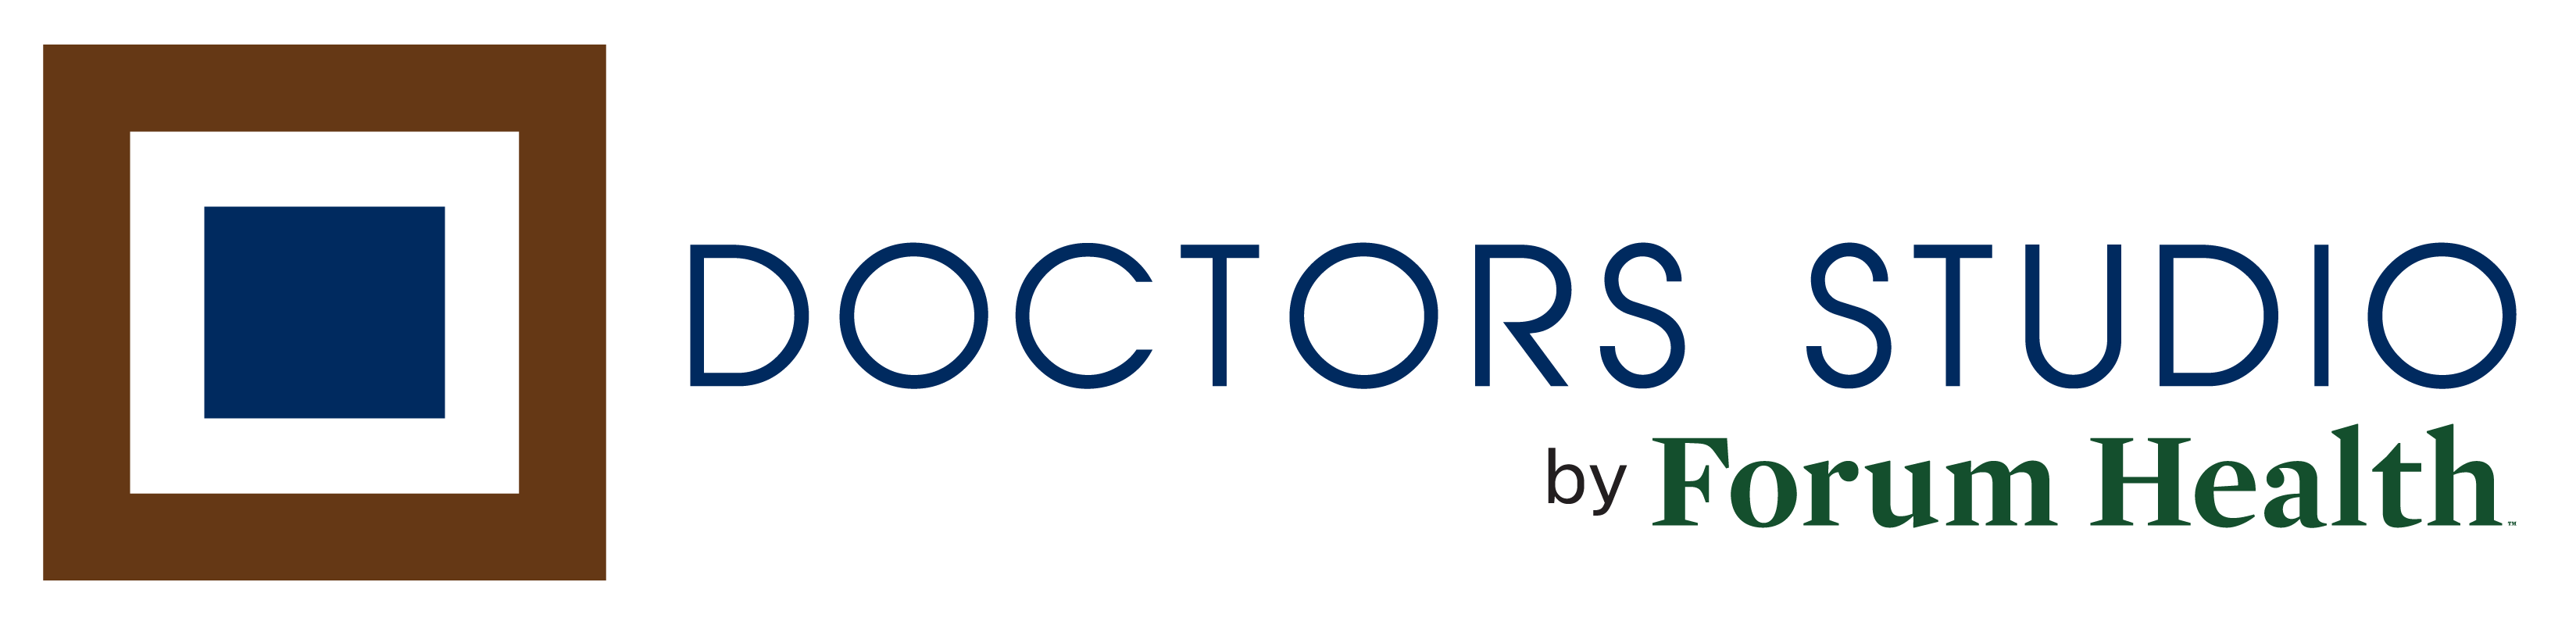 FH-DoctorsStudio-Logo-v3C